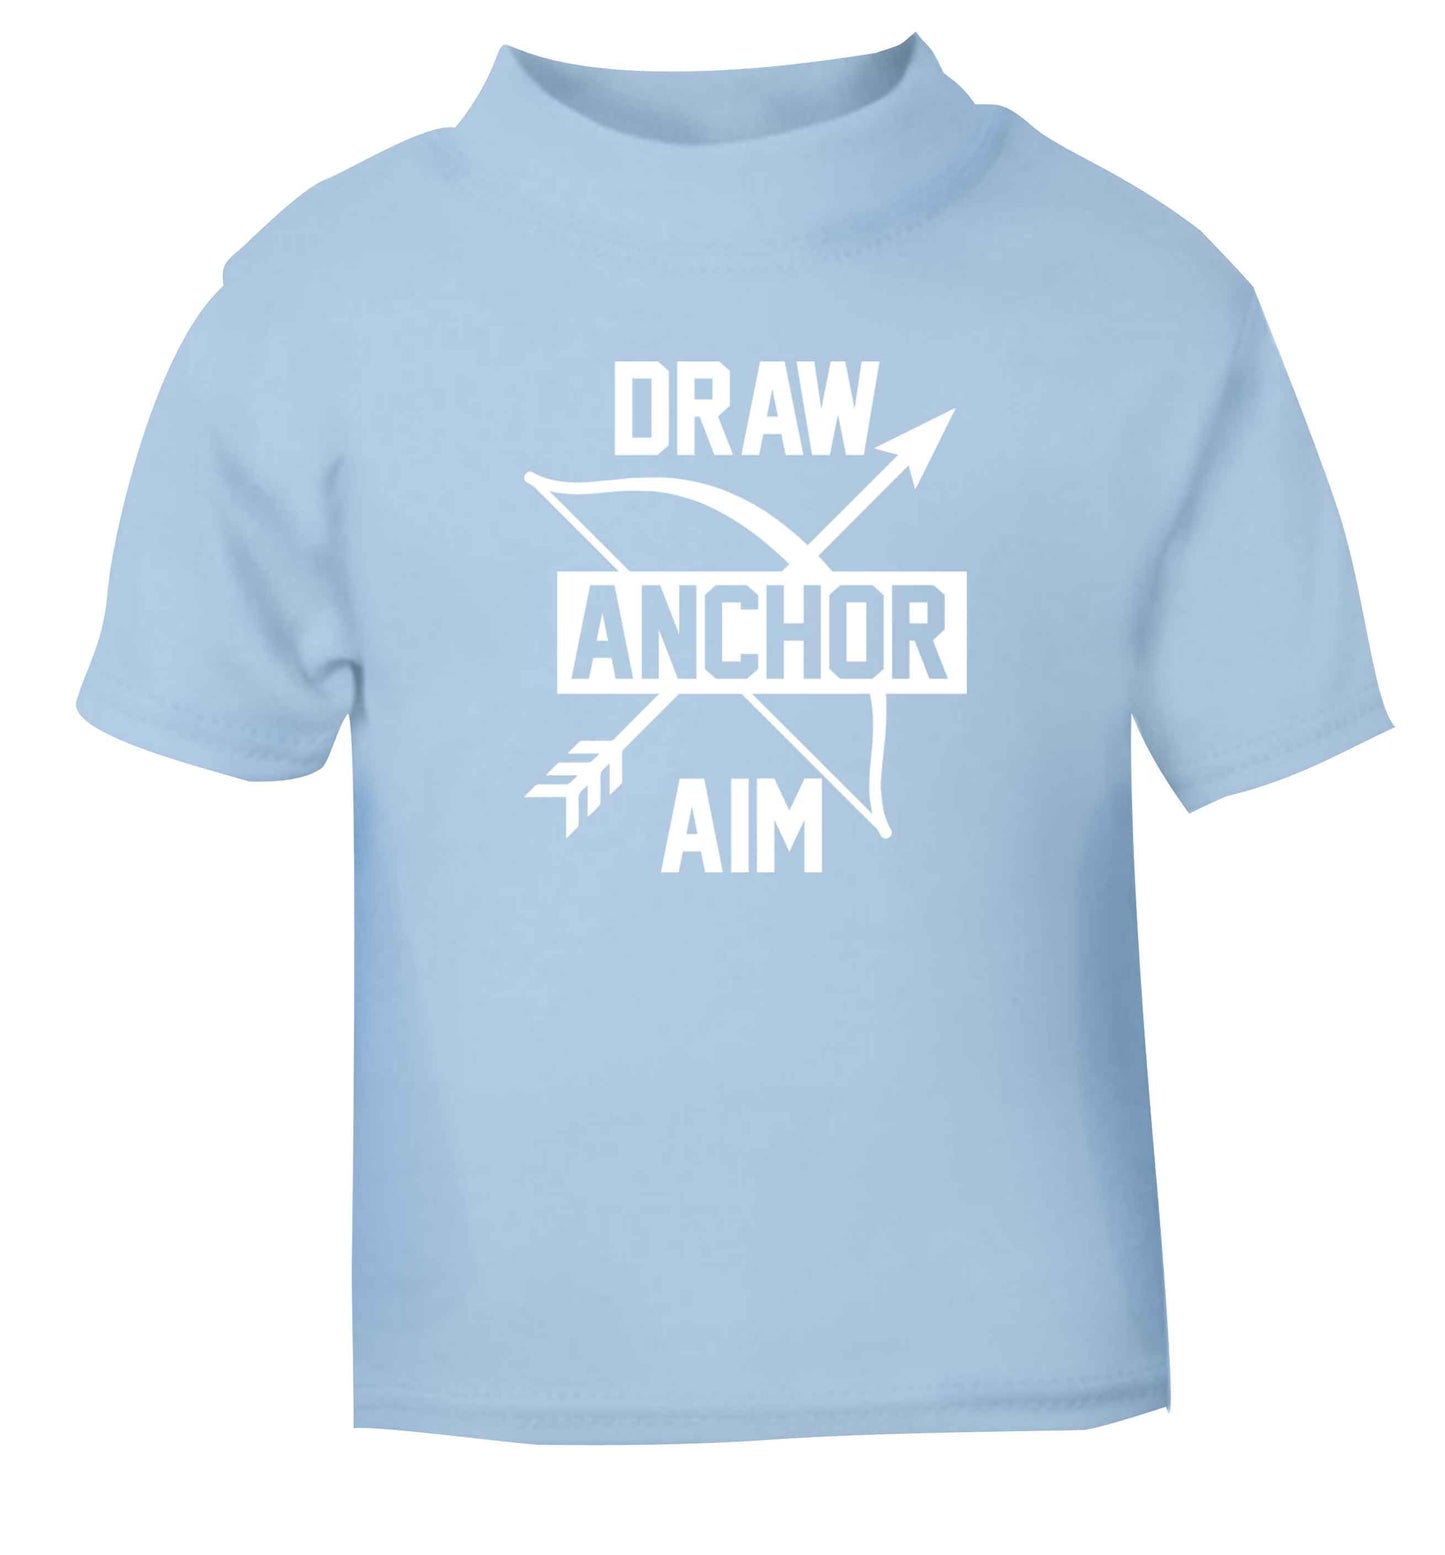 Draw anchor aim light blue Baby Toddler Tshirt 2 Years